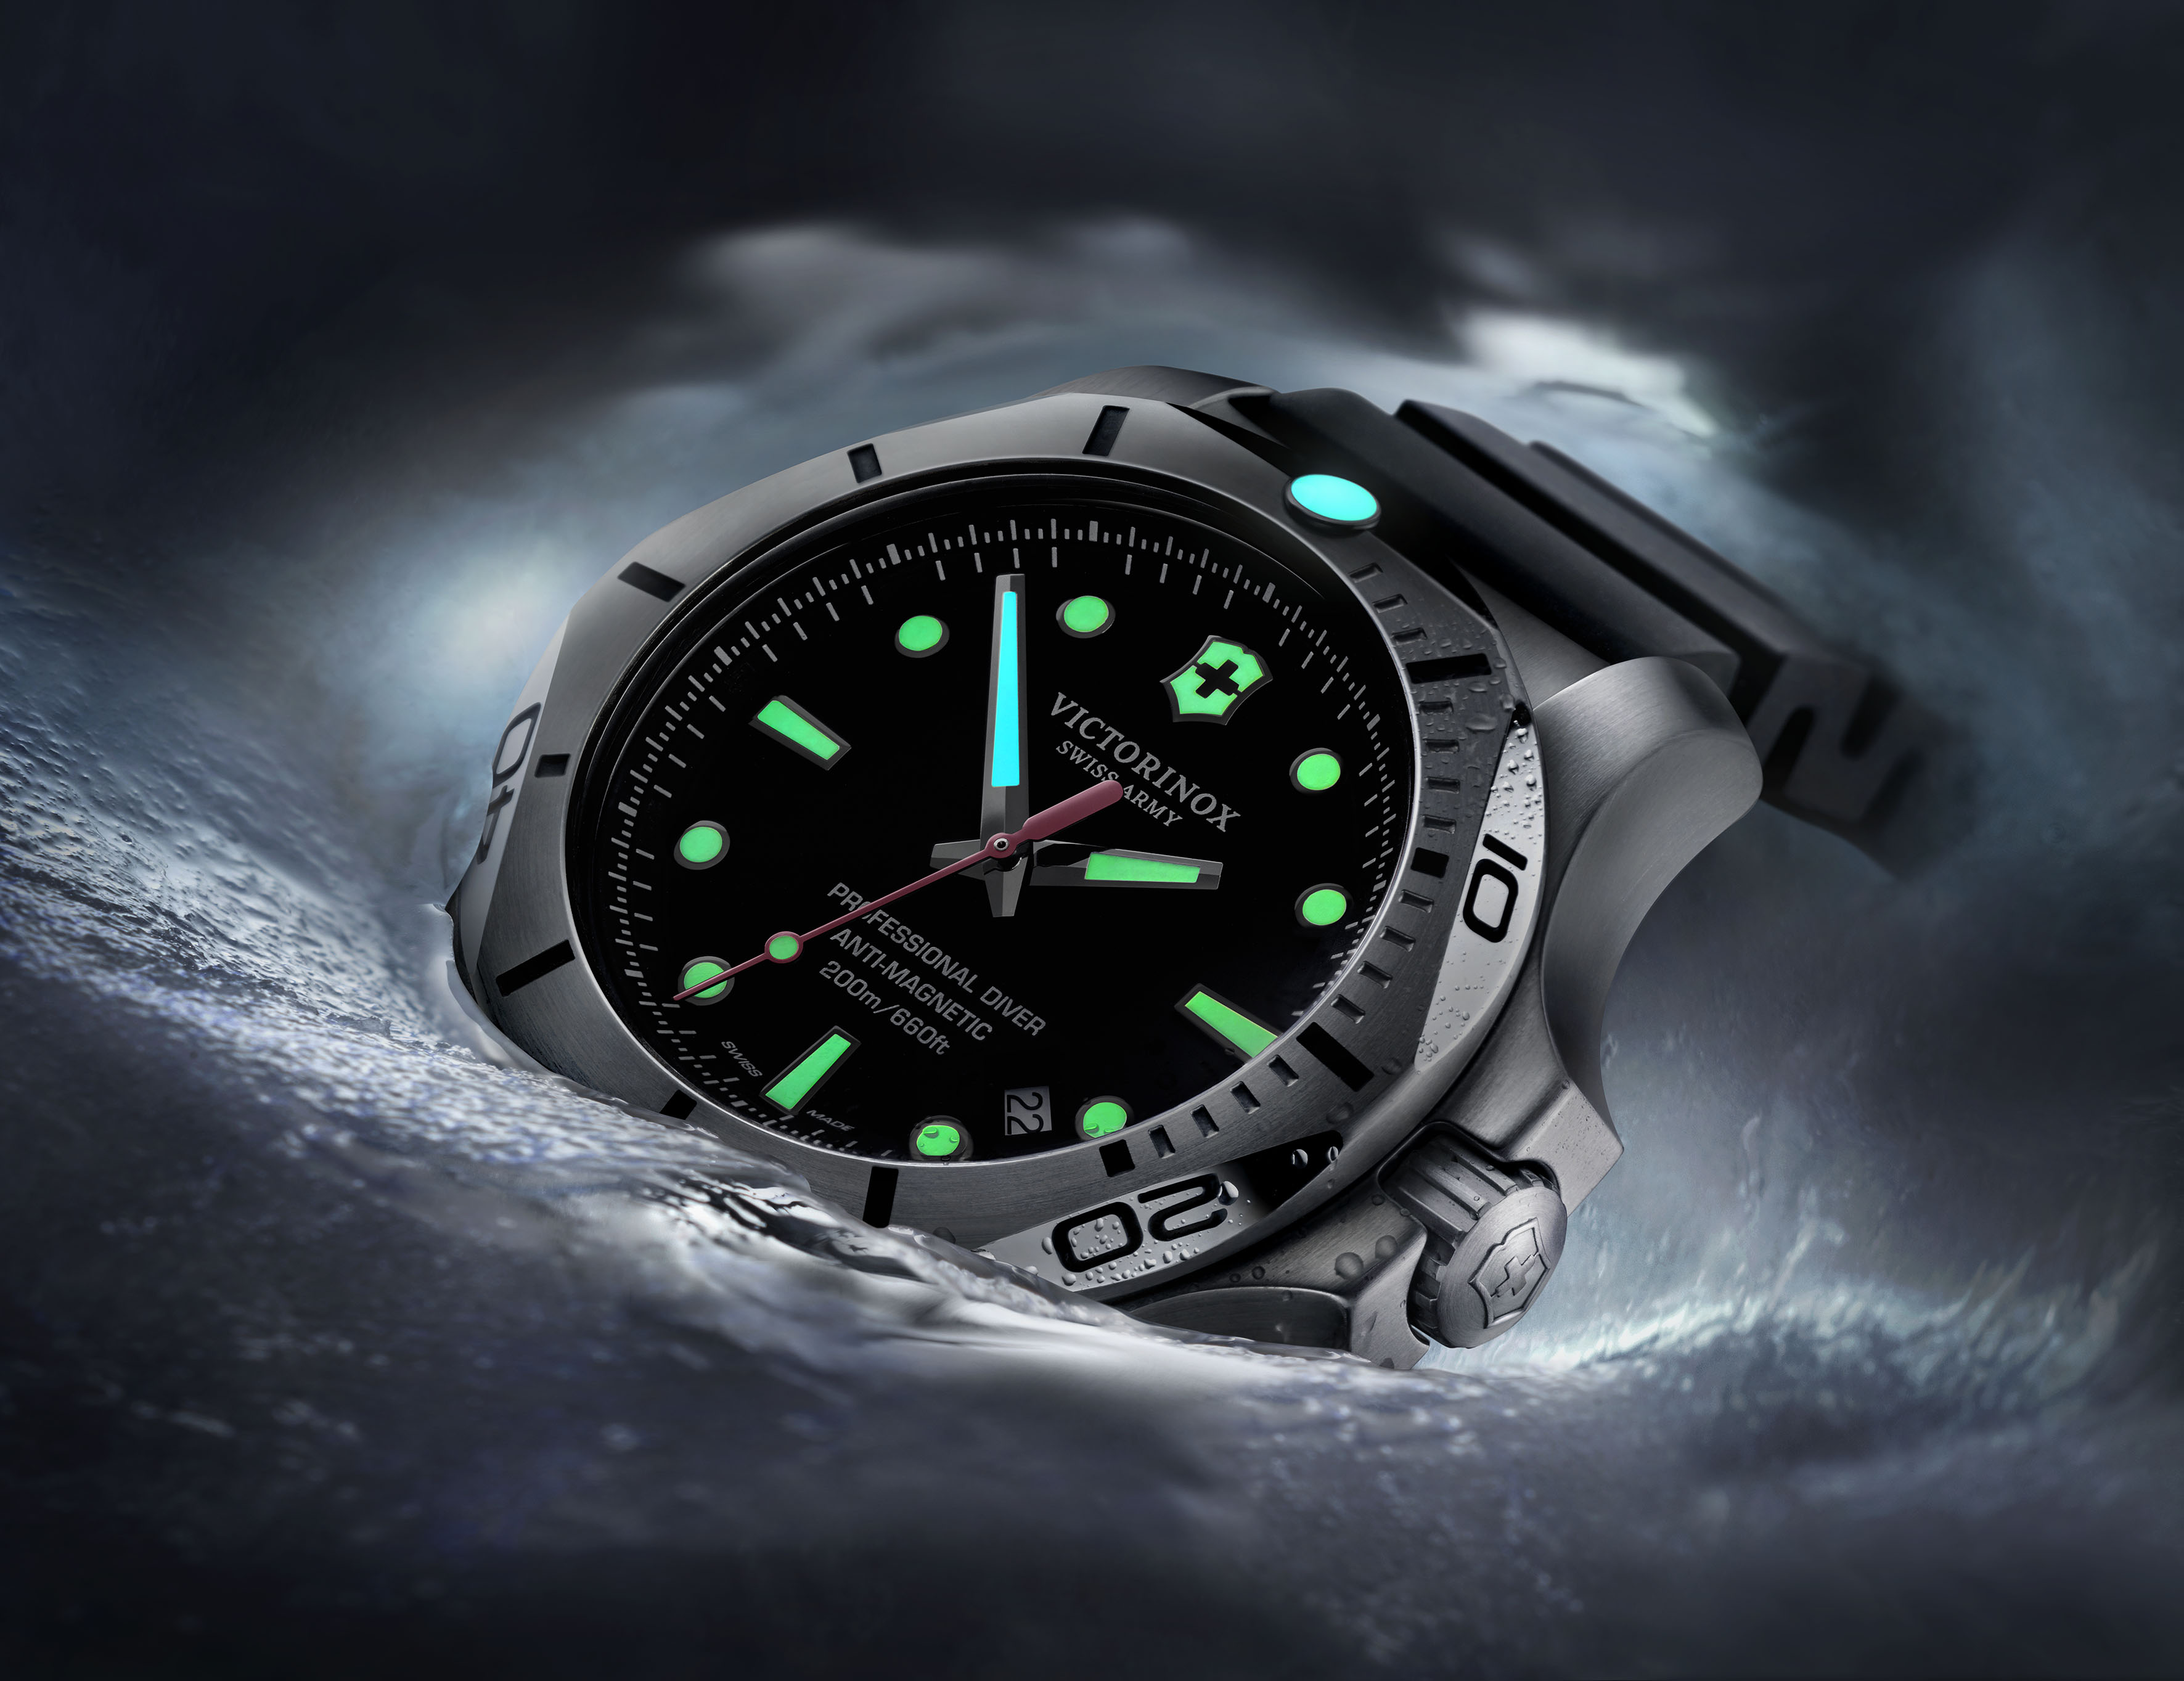 Victorinox Professional Diver luminous watch